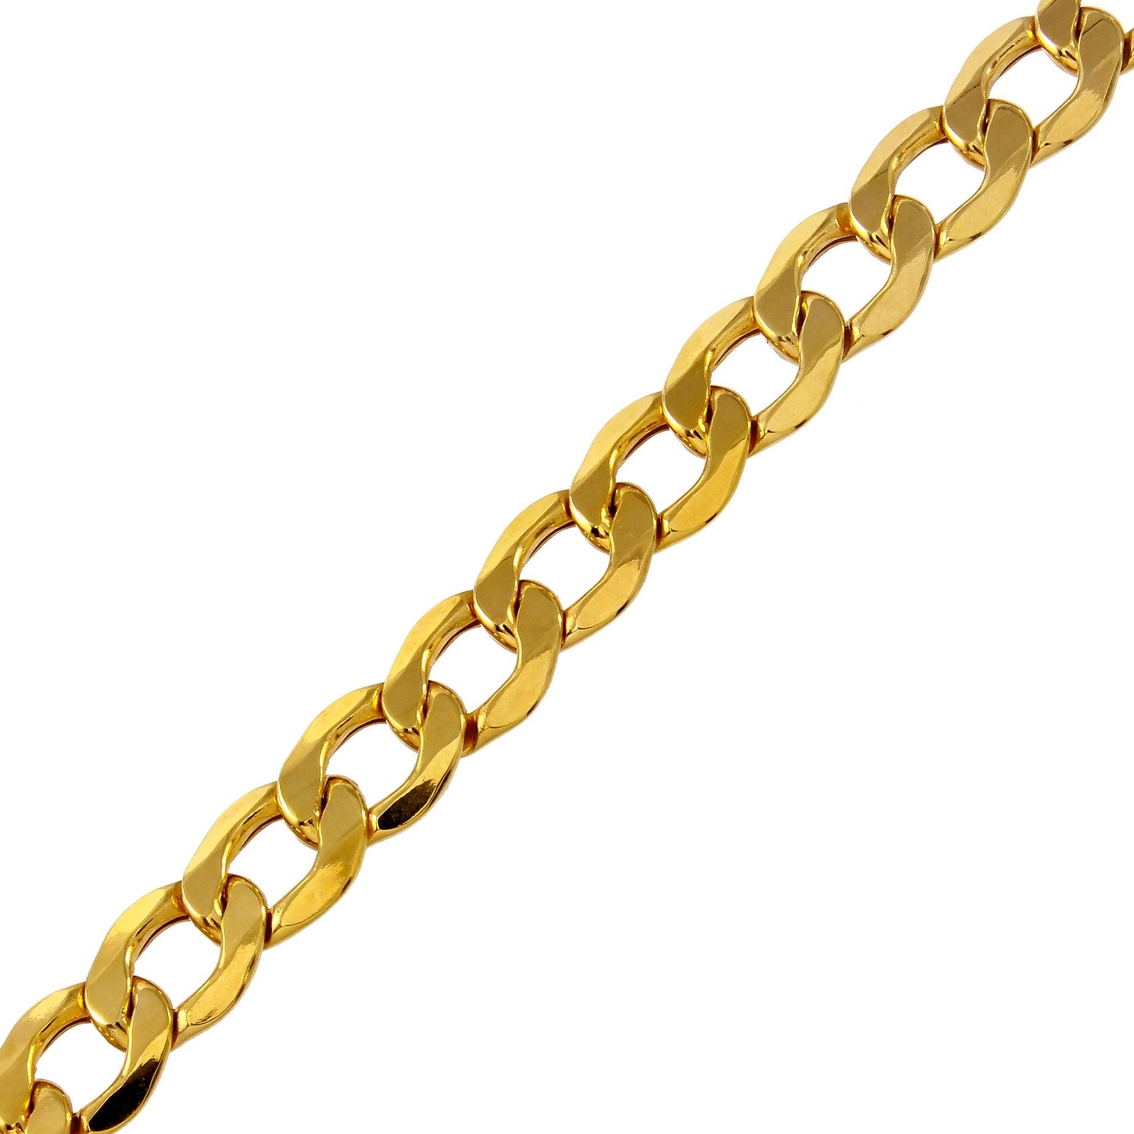 10K Yellow Gold 7mm Curb Link Bracelet - Image 2 of 2